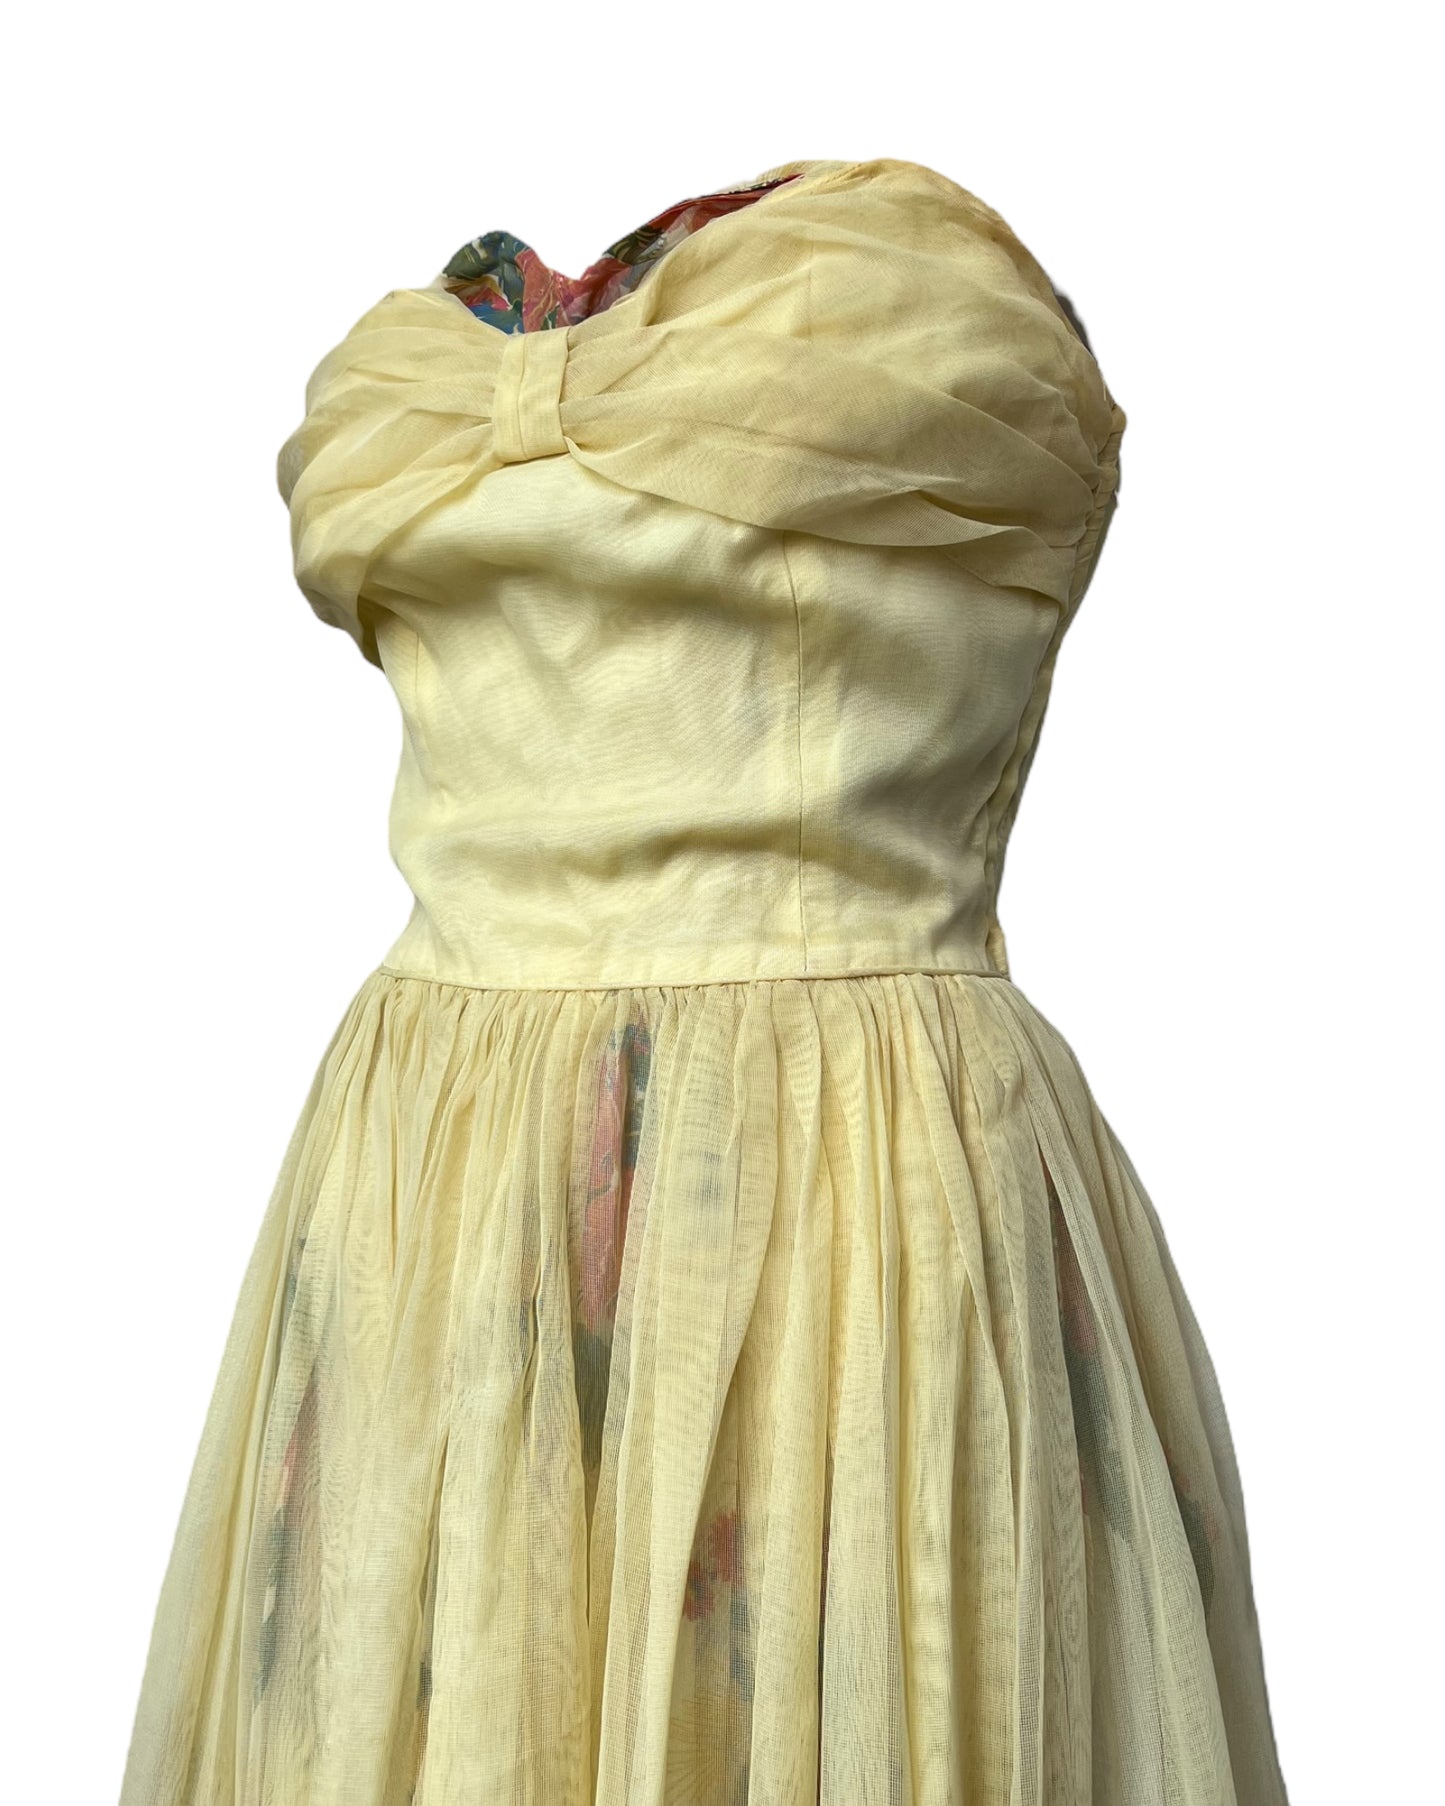 1950s Belle Princess Dress*